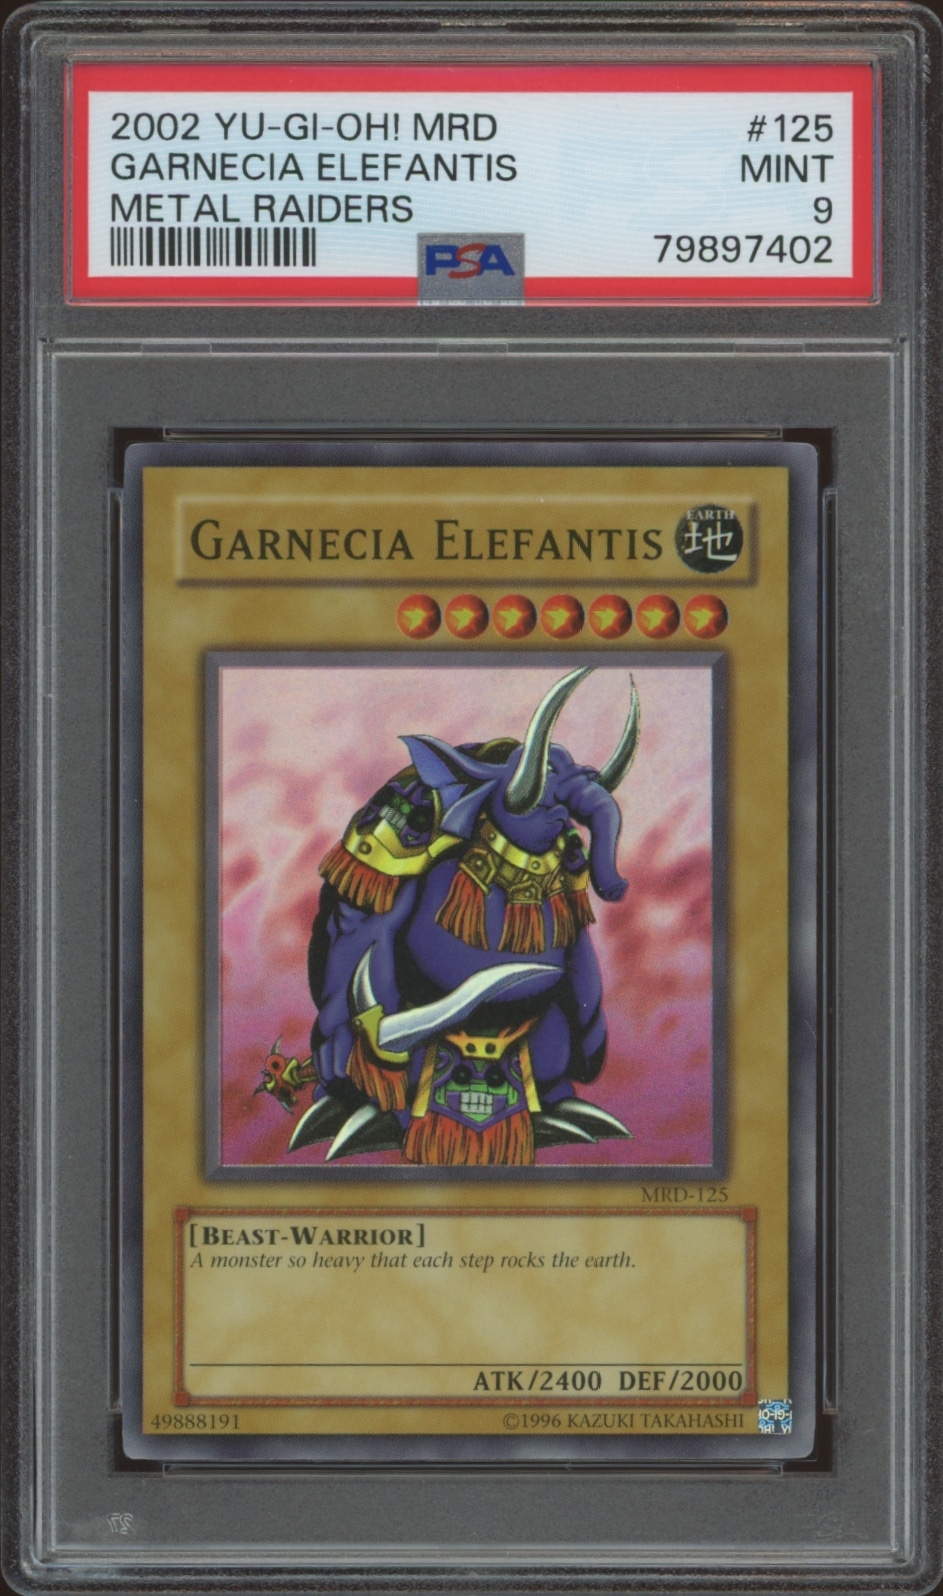 Graded 2002 Yu-Gi-Oh! Garnecia Elefantis card from Metal Raiders set in PSA protective slab.